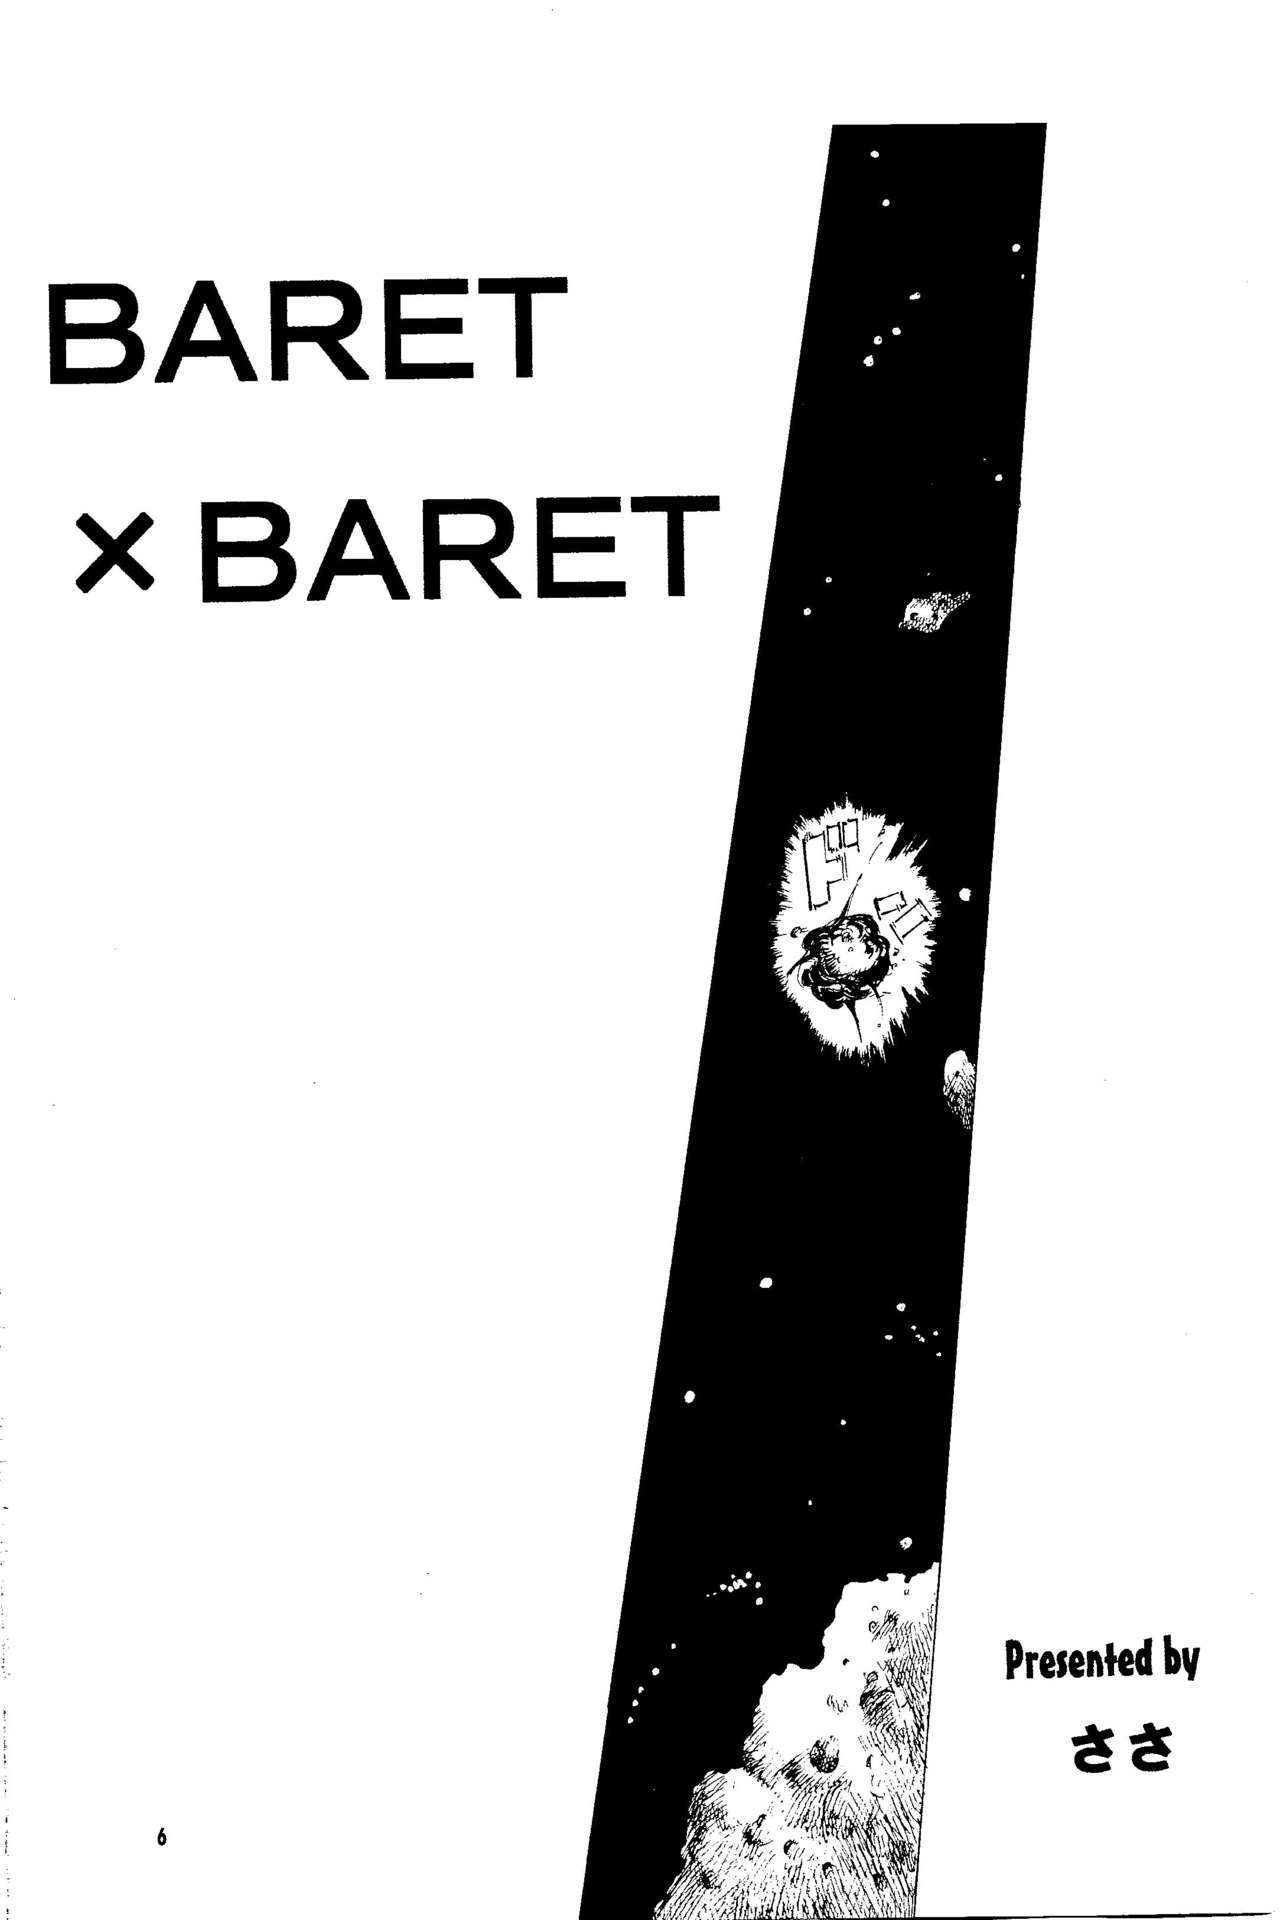 BARET x BARET